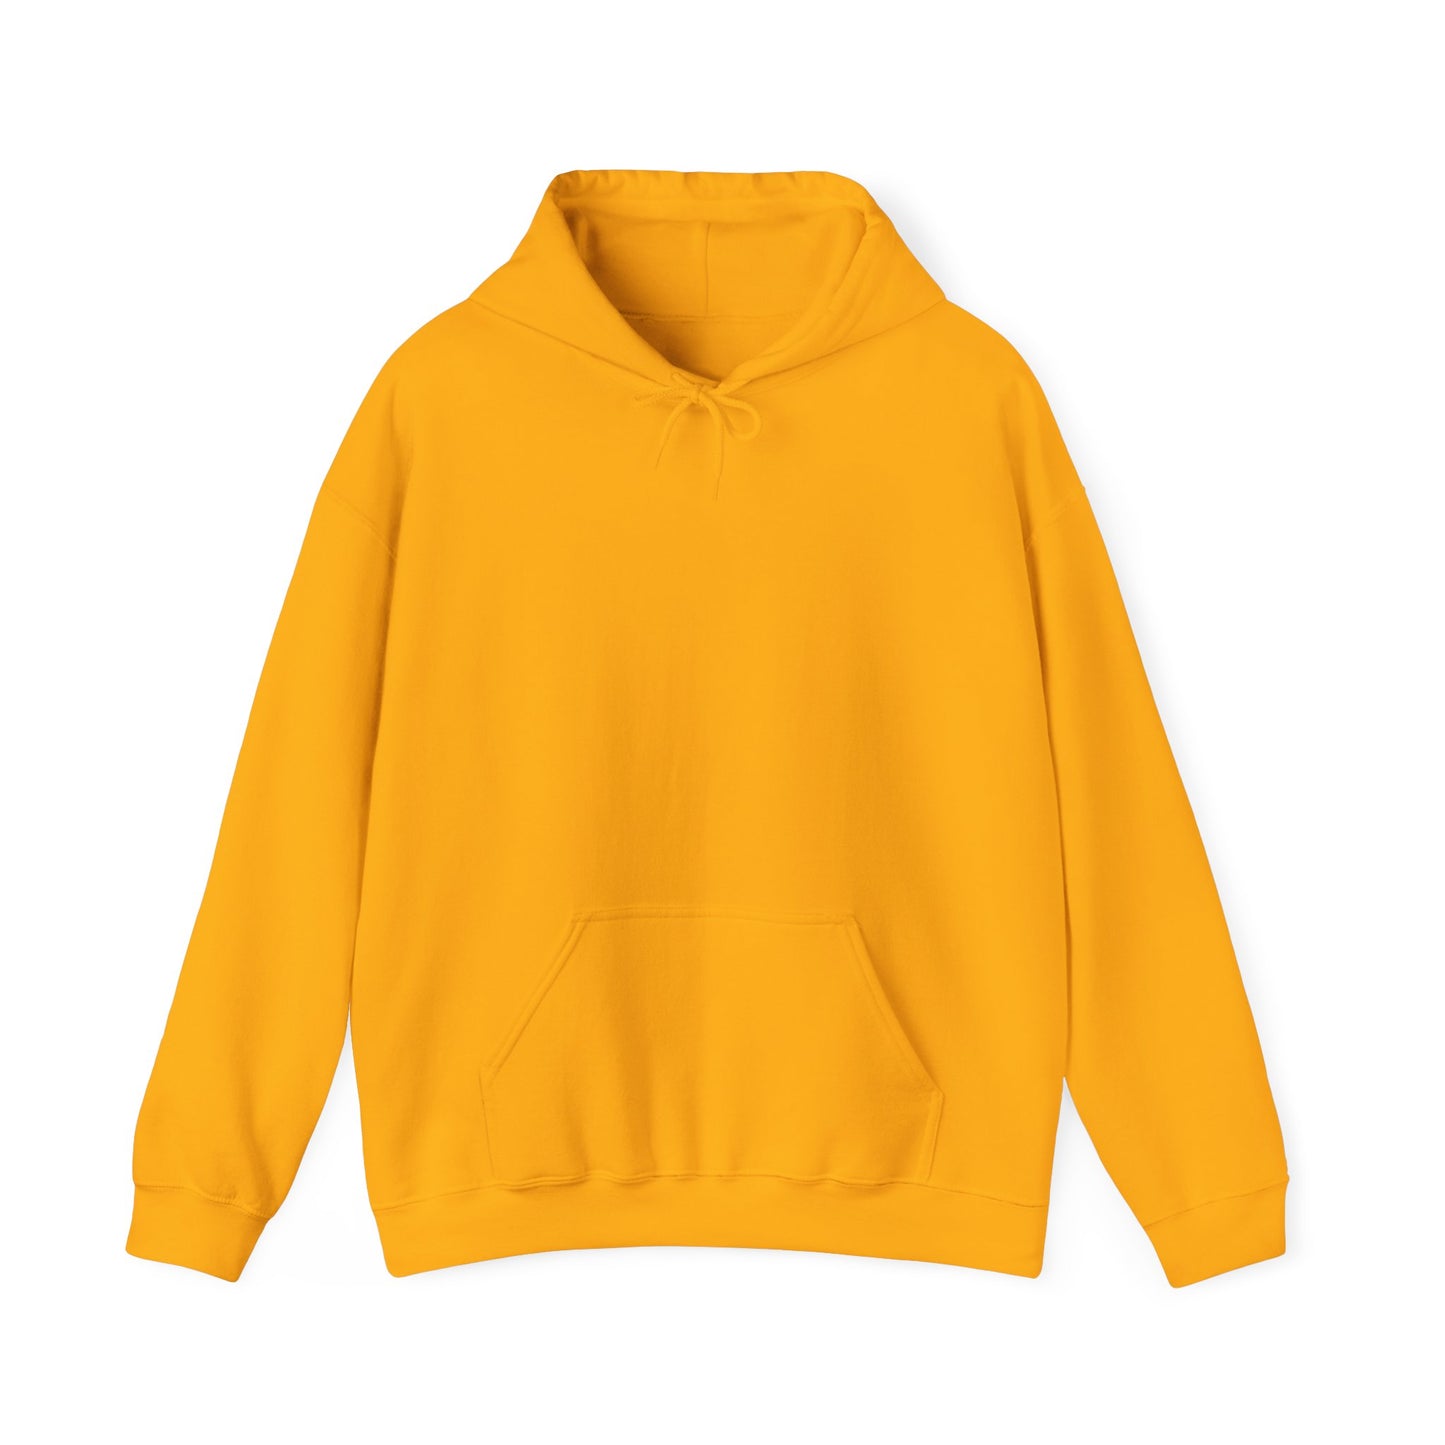 Get Lit Unisex Heavy Blend Hooded Sweatshirt